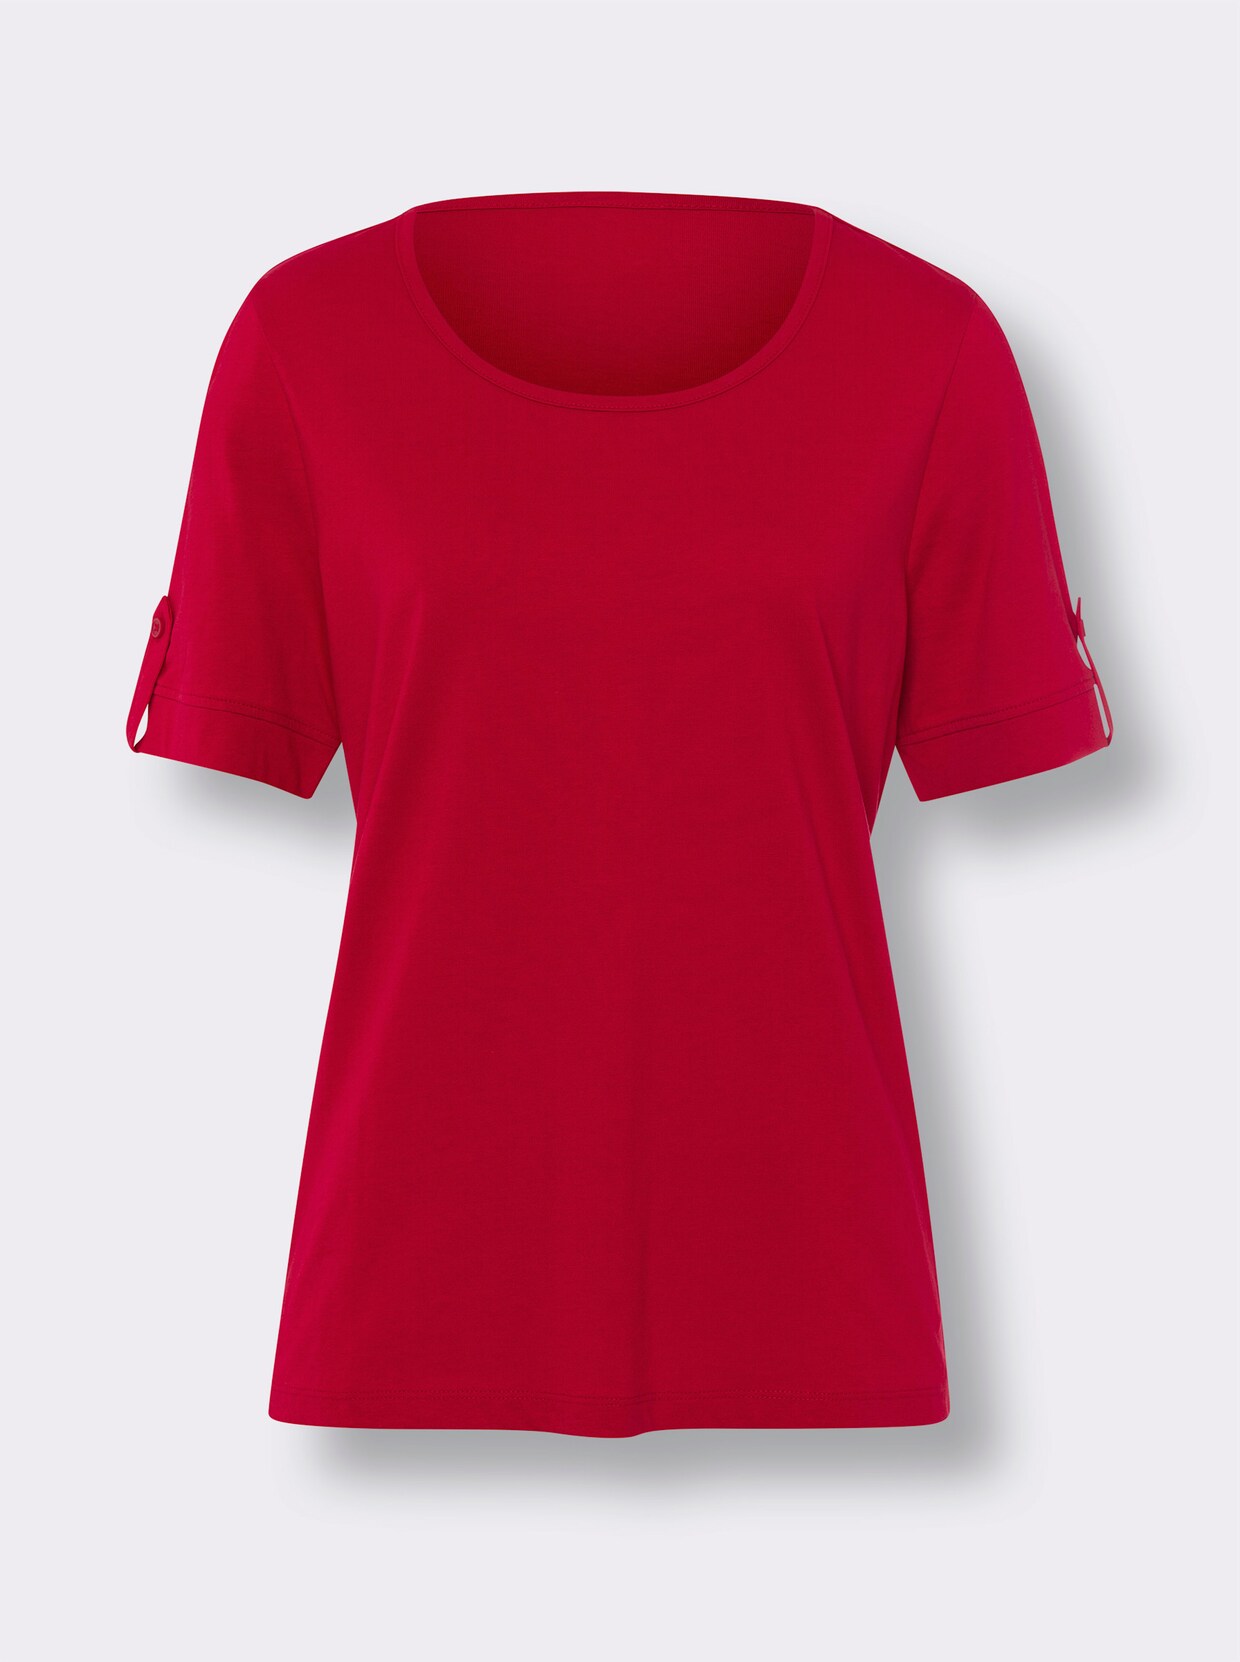 Doppelpack Shirts - rot + ecru-rot-geringelt